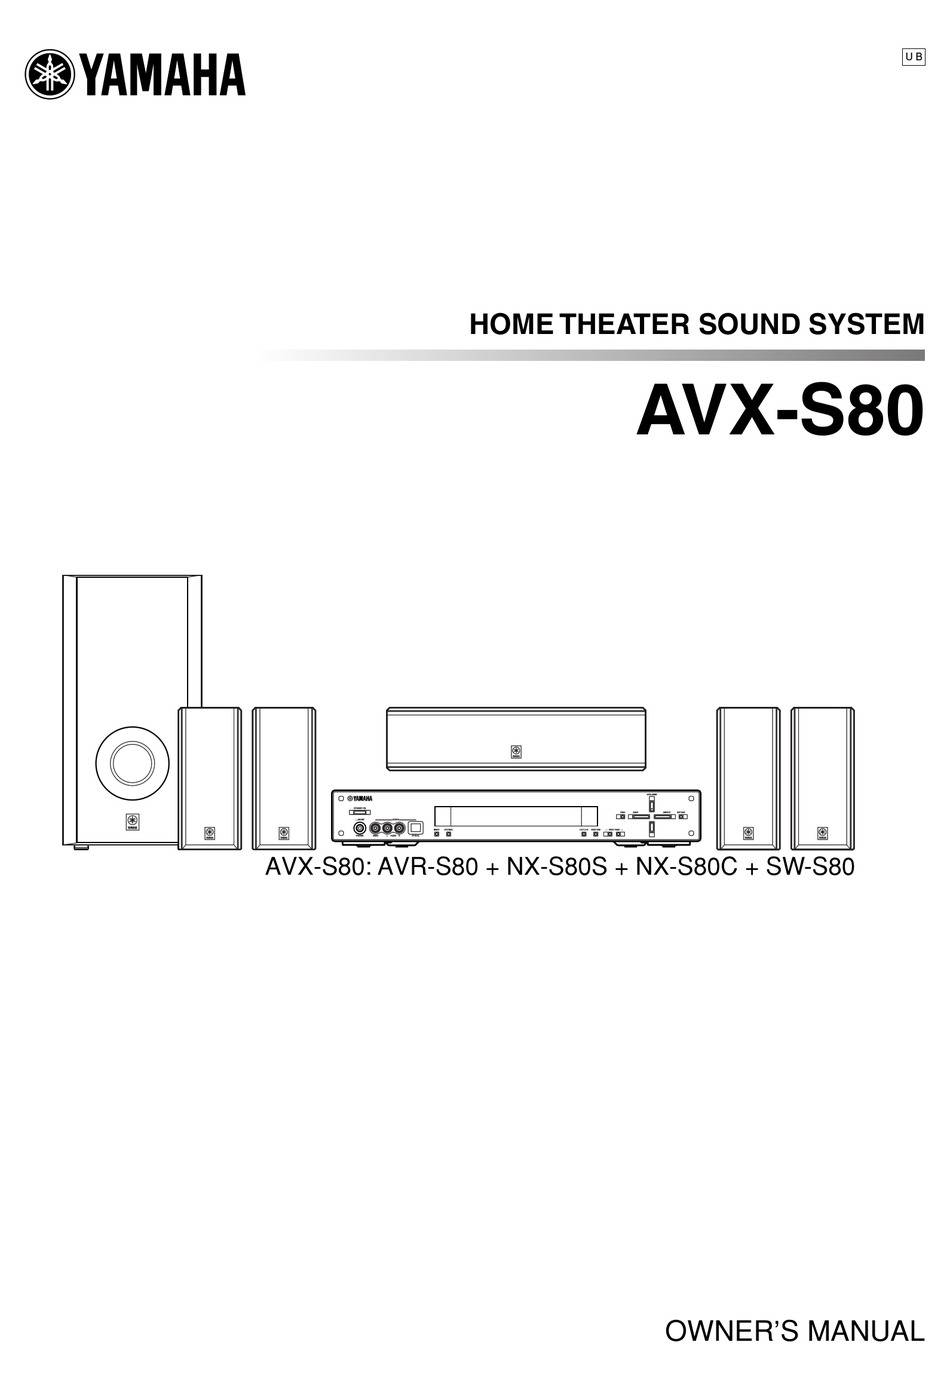 Yamaha AVX-S80